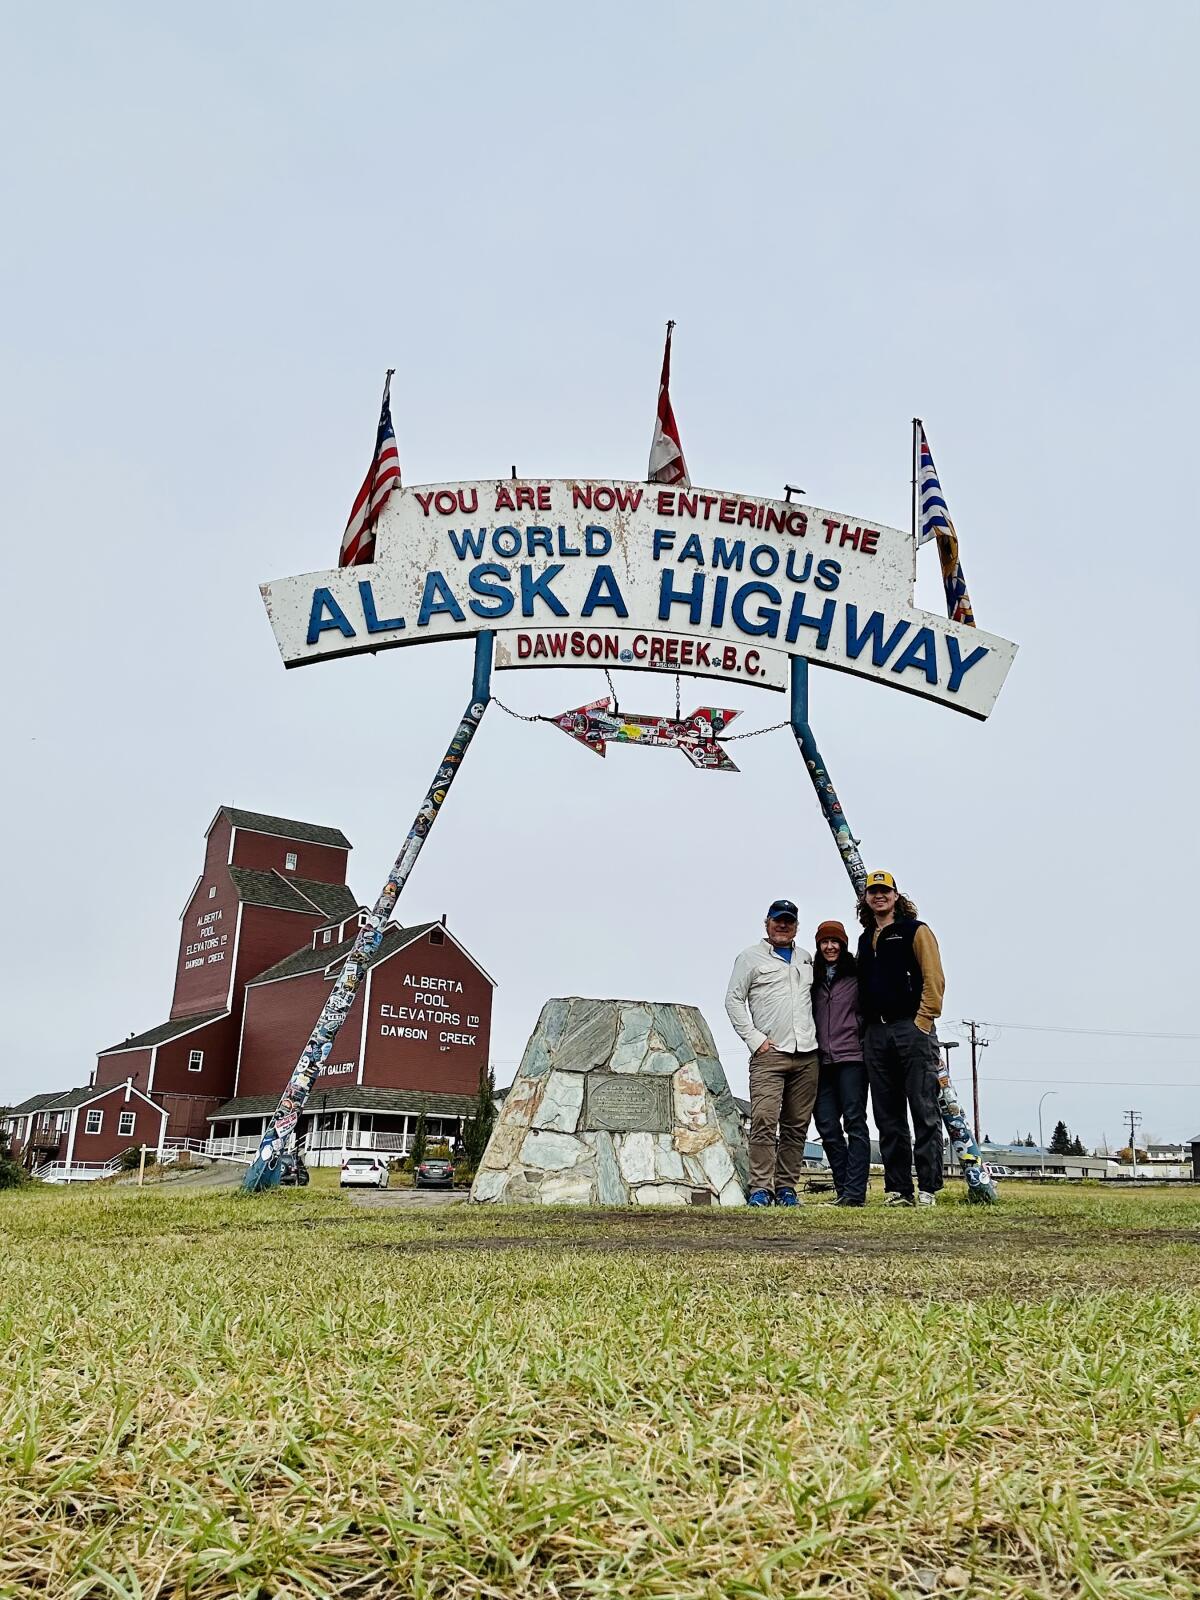 Elaine Glusac and her family at the Alaska Highway’s Mile Zero marker in Dawson Creek, British Columbia.